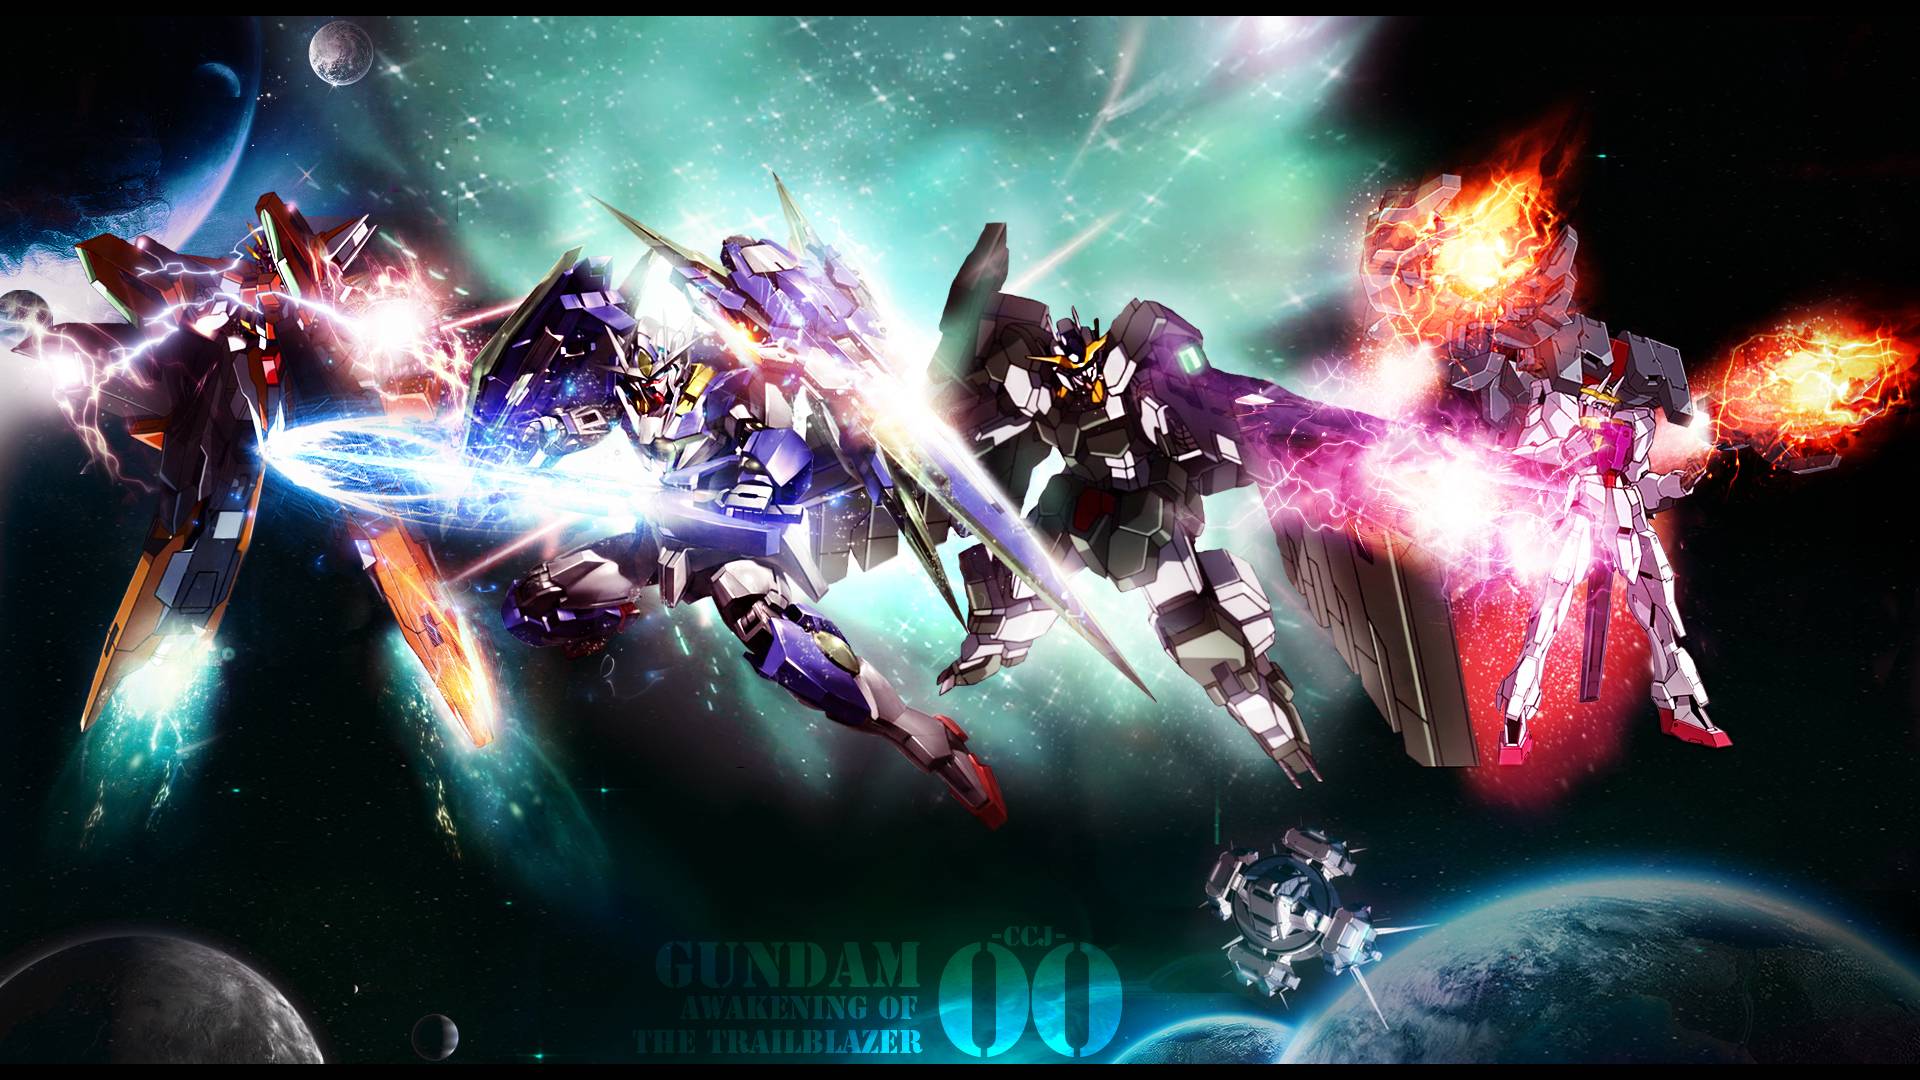 Free Download Awakening Of The Trailblazer Gundam 00 Wallpaper 1920x1080 For Your Desktop Mobile Tablet Explore 78 Gundam 00 Wallpaper Gundam Seed Destiny Wallpaper Gundam Wallpaper Gundam Wallpaper 1920x1080